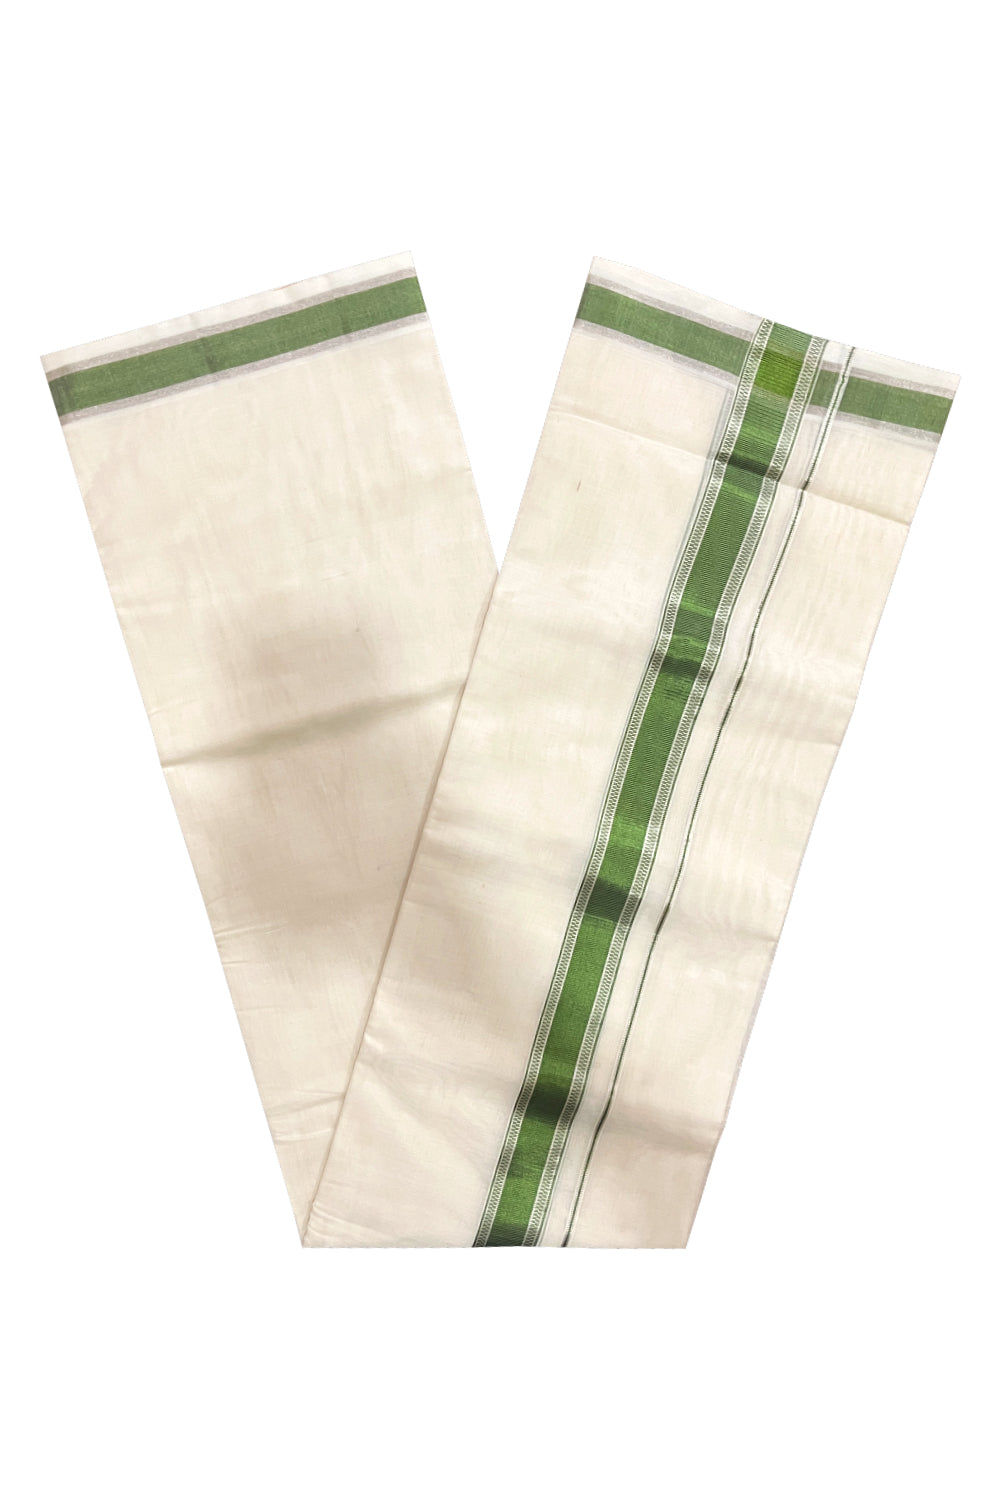 Southloom Premium Handloom Cotton Double Mundu with Silver and Green Kasavu Design Border (South Indian Kerala Dhoti)